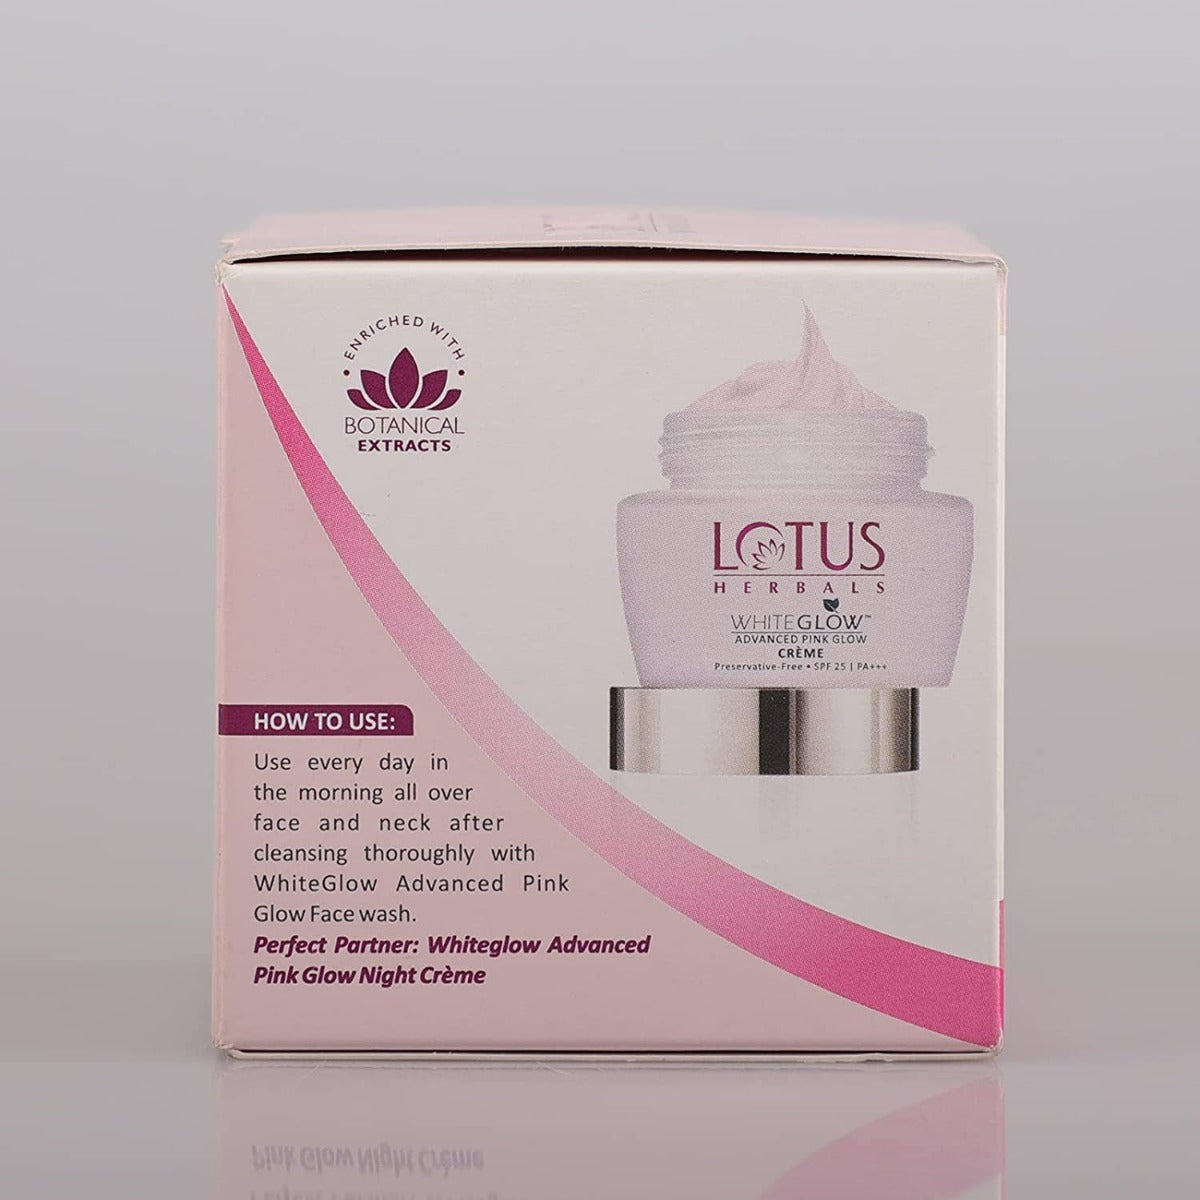 Lotus Herbals Whiteglow Advance Pink Glow Cream SPF 25 I Pa+++ (35gm)